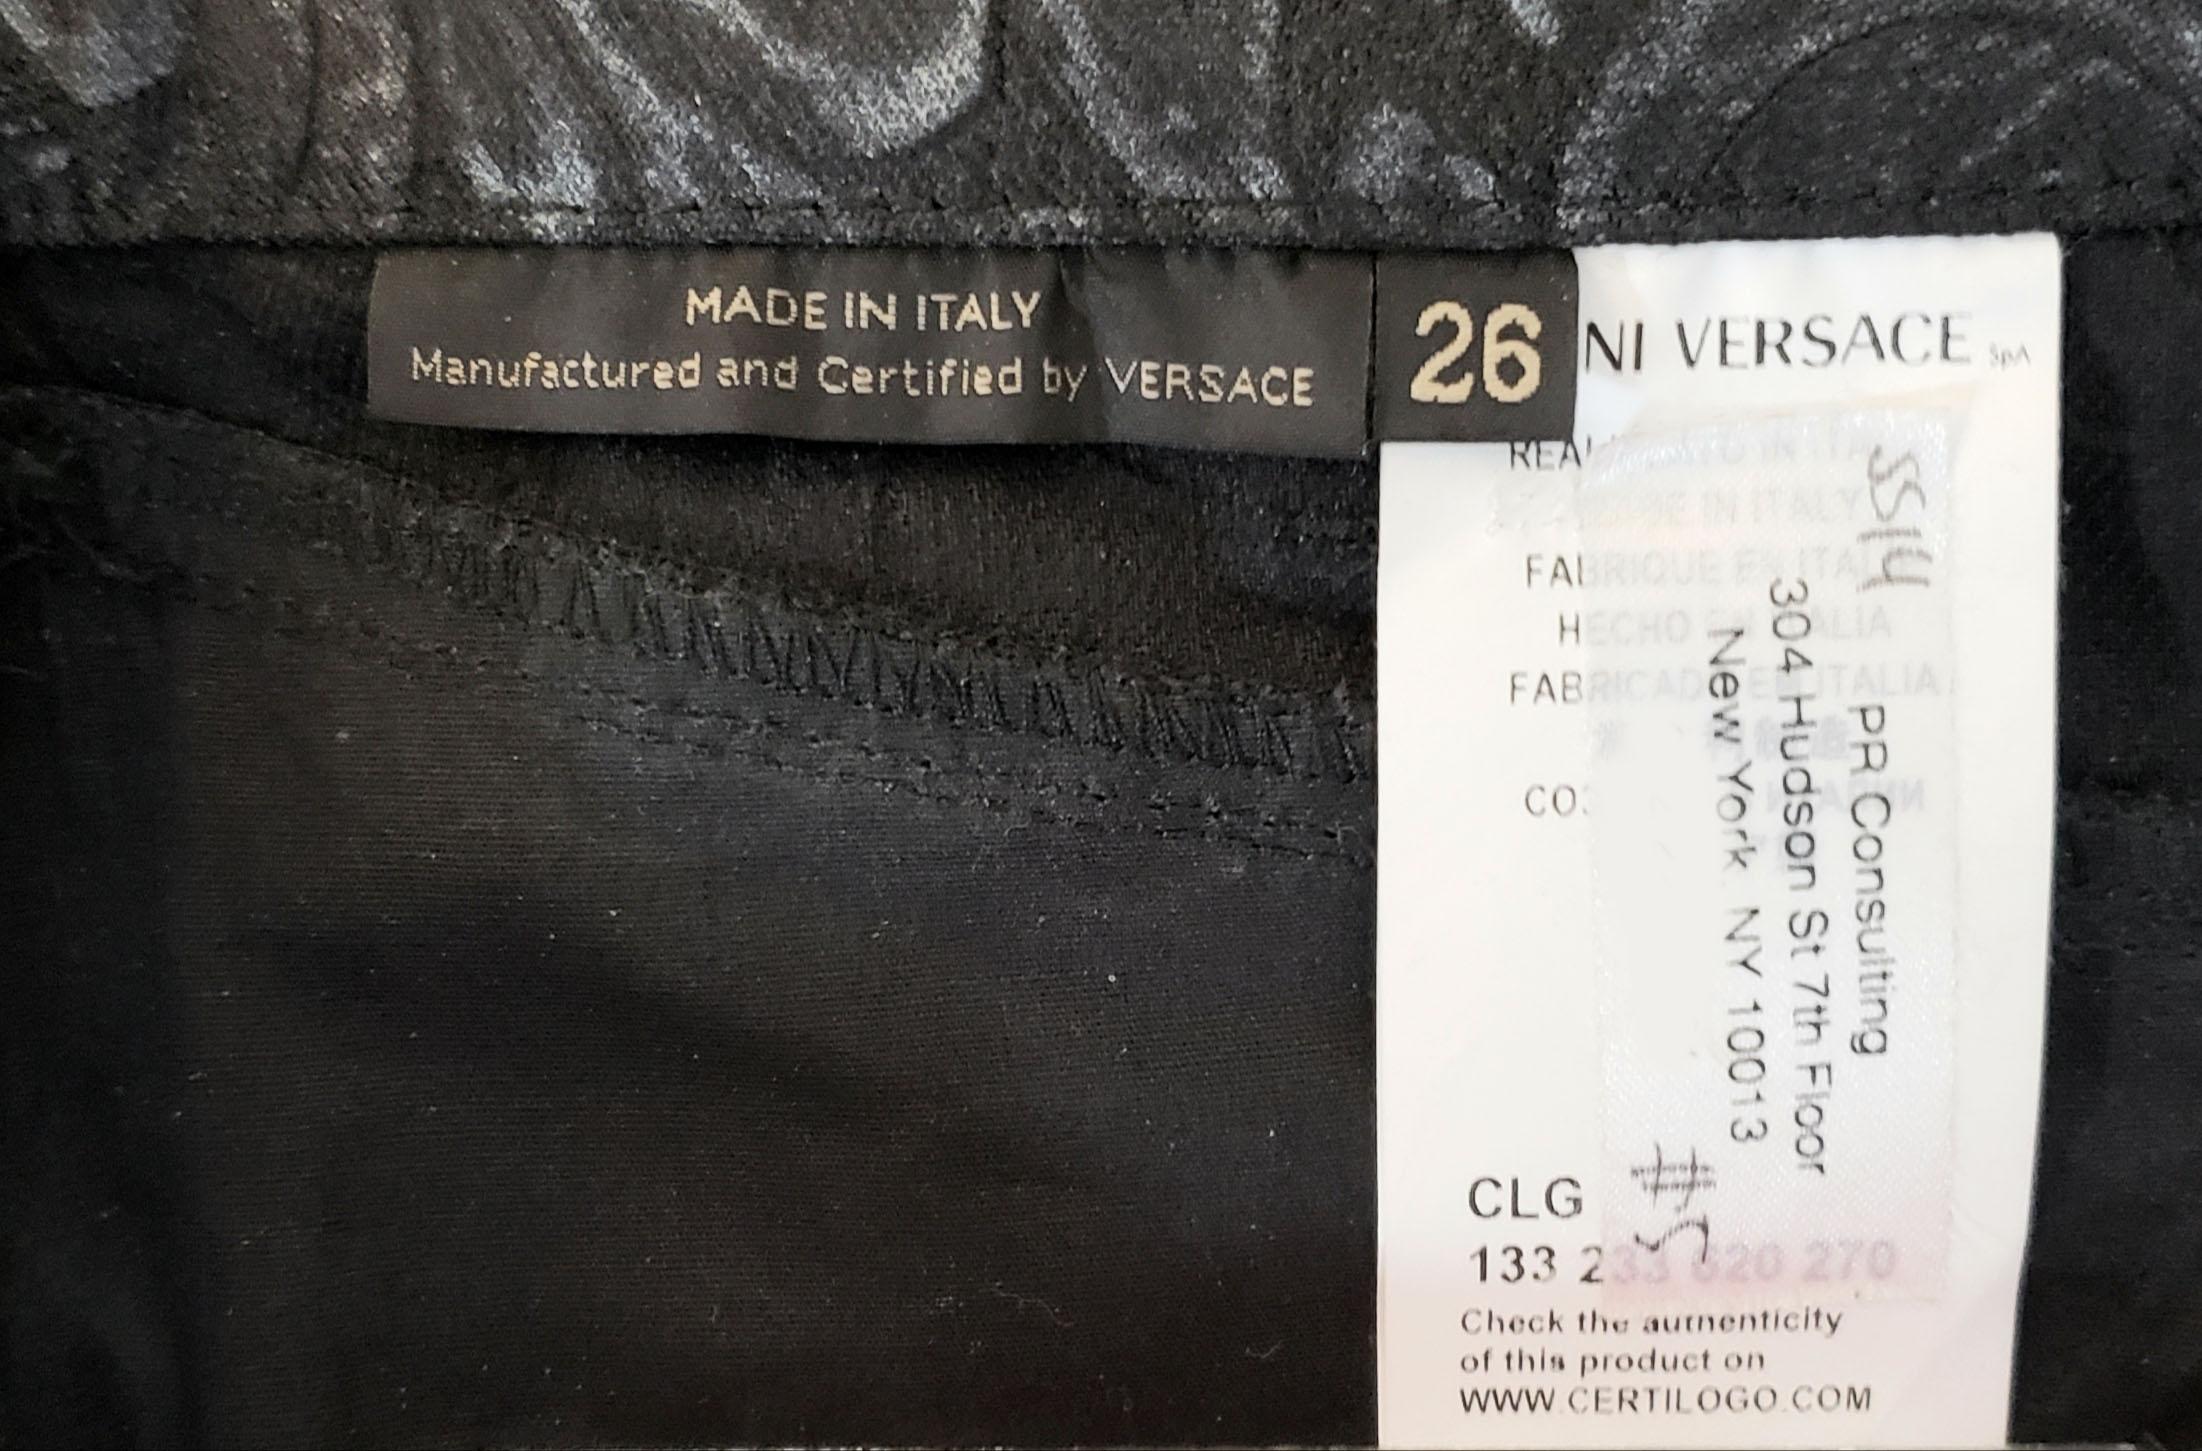 S/S 2014 Look # 5 VERSACE BLACK FLORAL JEANS PANTS size 26 For Sale 4